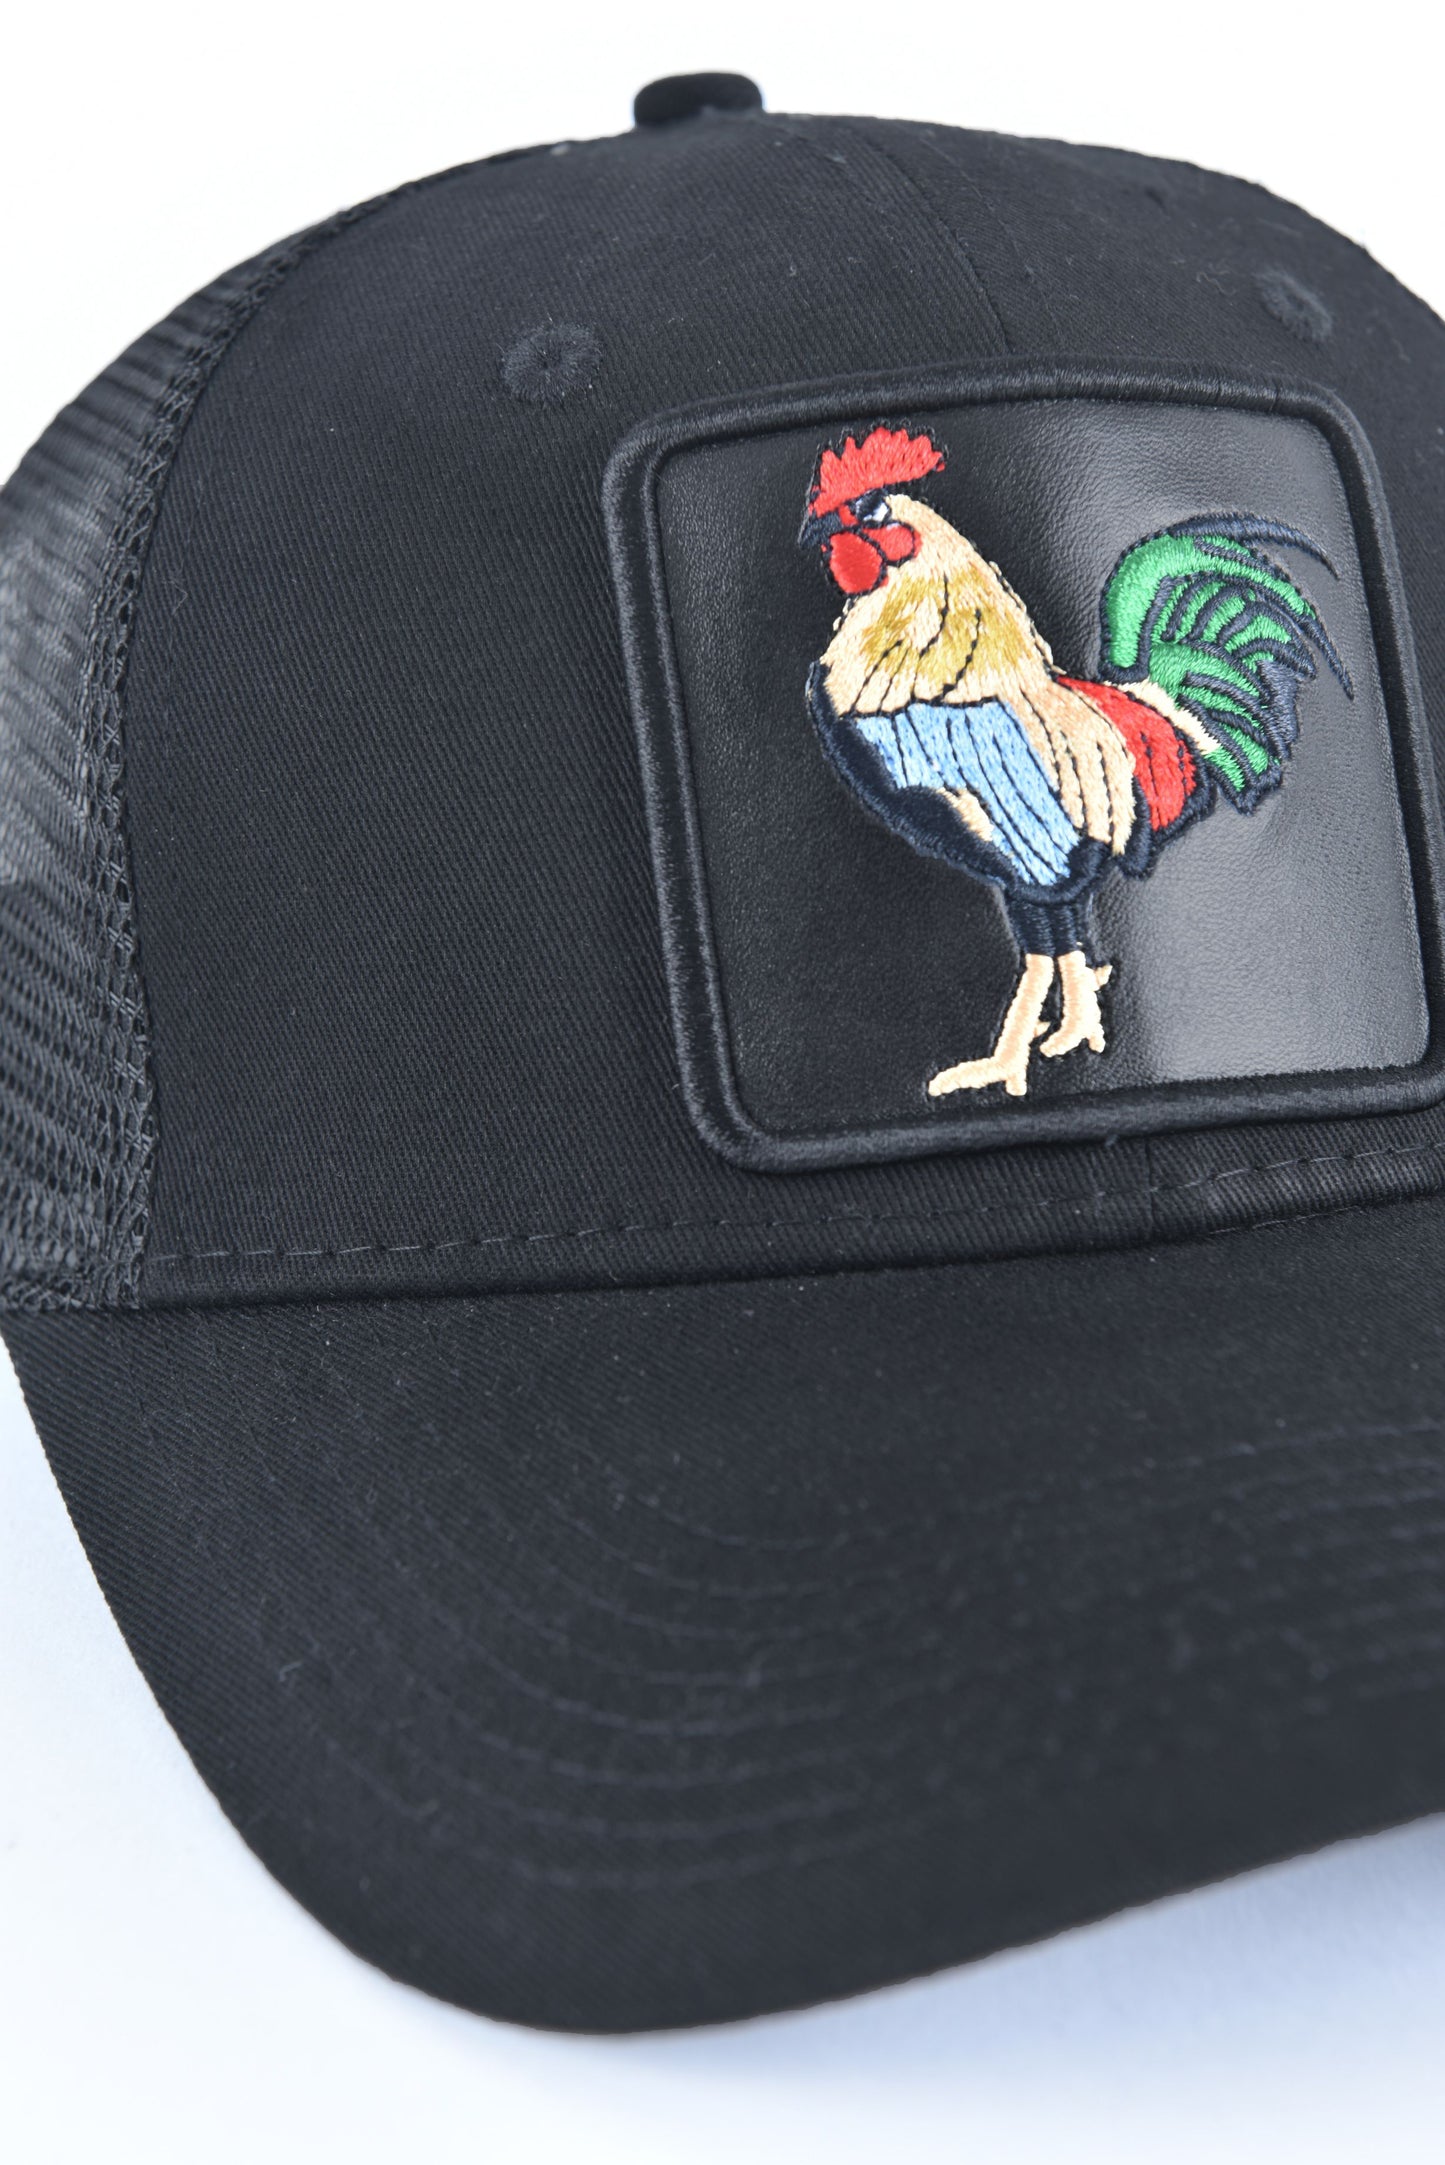 Mens Rooster Logo Baseball Cap - Black